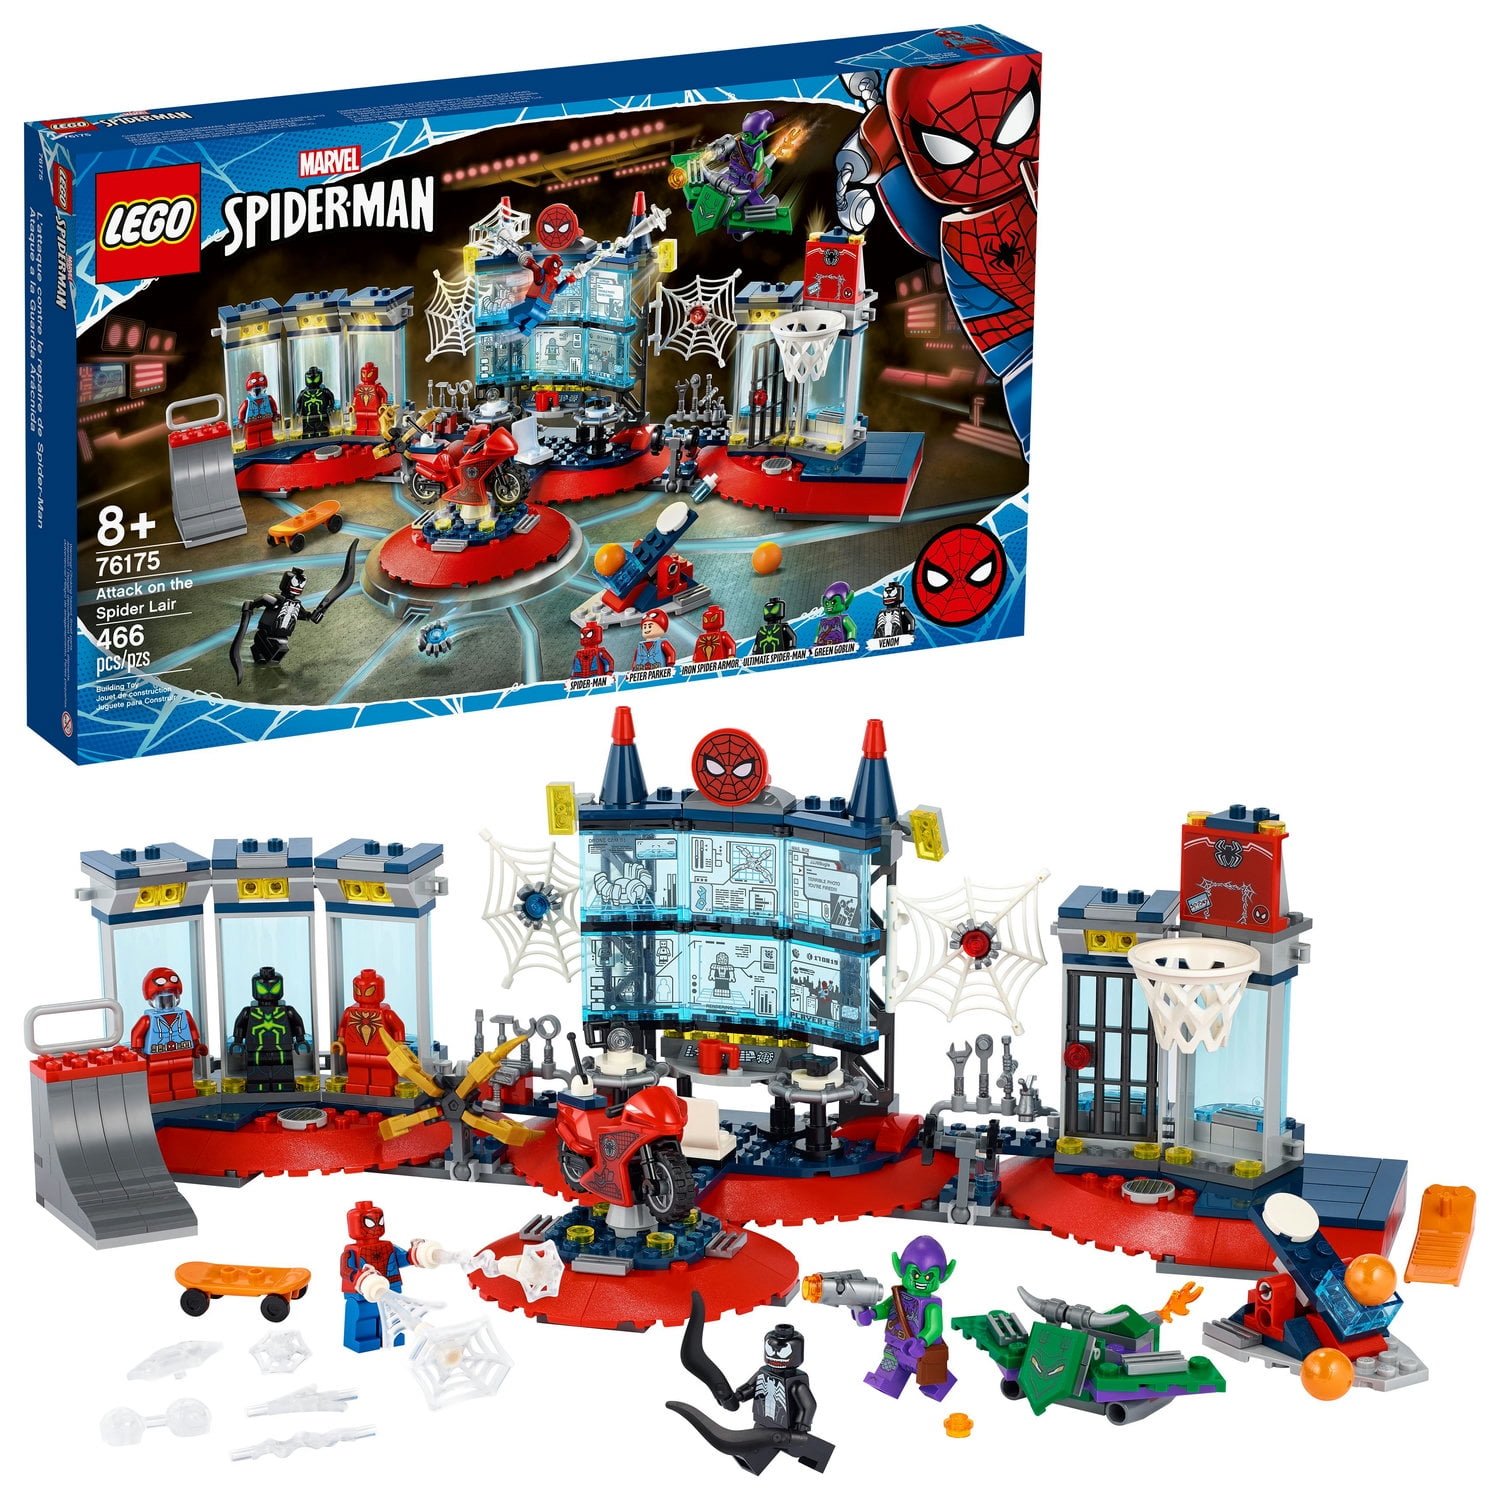 nosotros metálico Endurecer LEGO Marvel Spider-Man Attack on the Spider Lair 76175 Collectible Building  Toy (466 Pieces) - Walmart.com